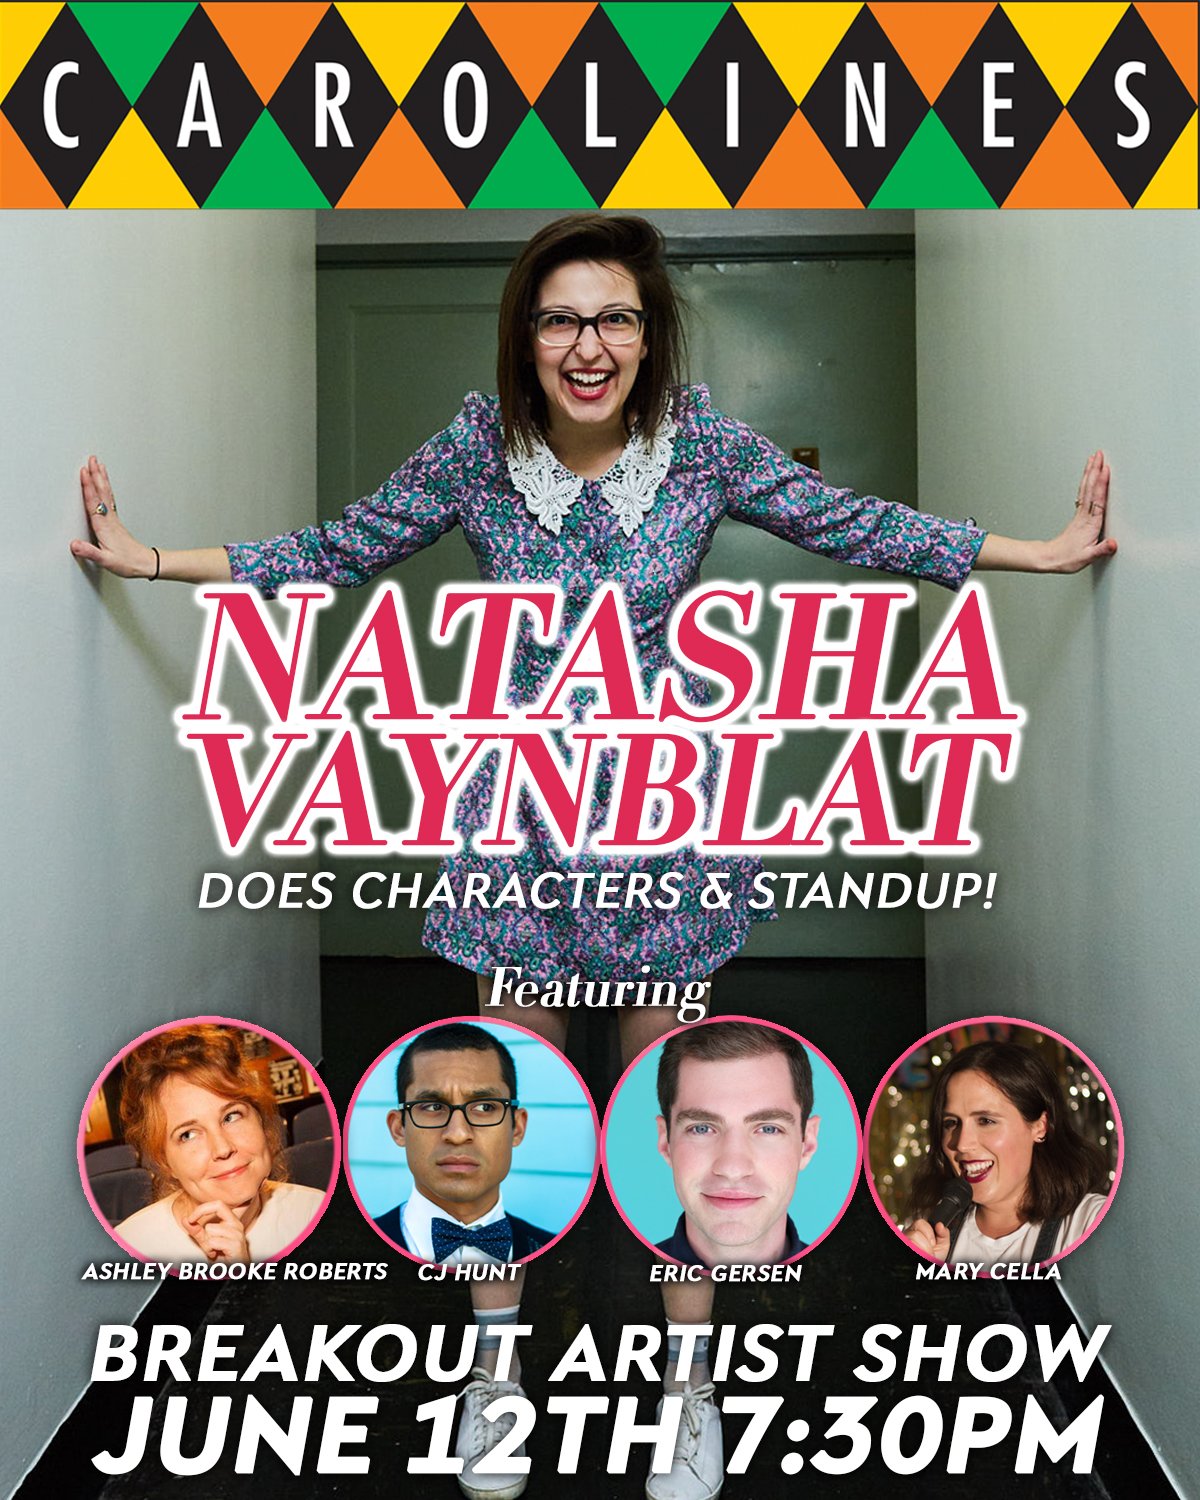 Natasha Vaynblat Does Characters and Stand-Up at Carolines